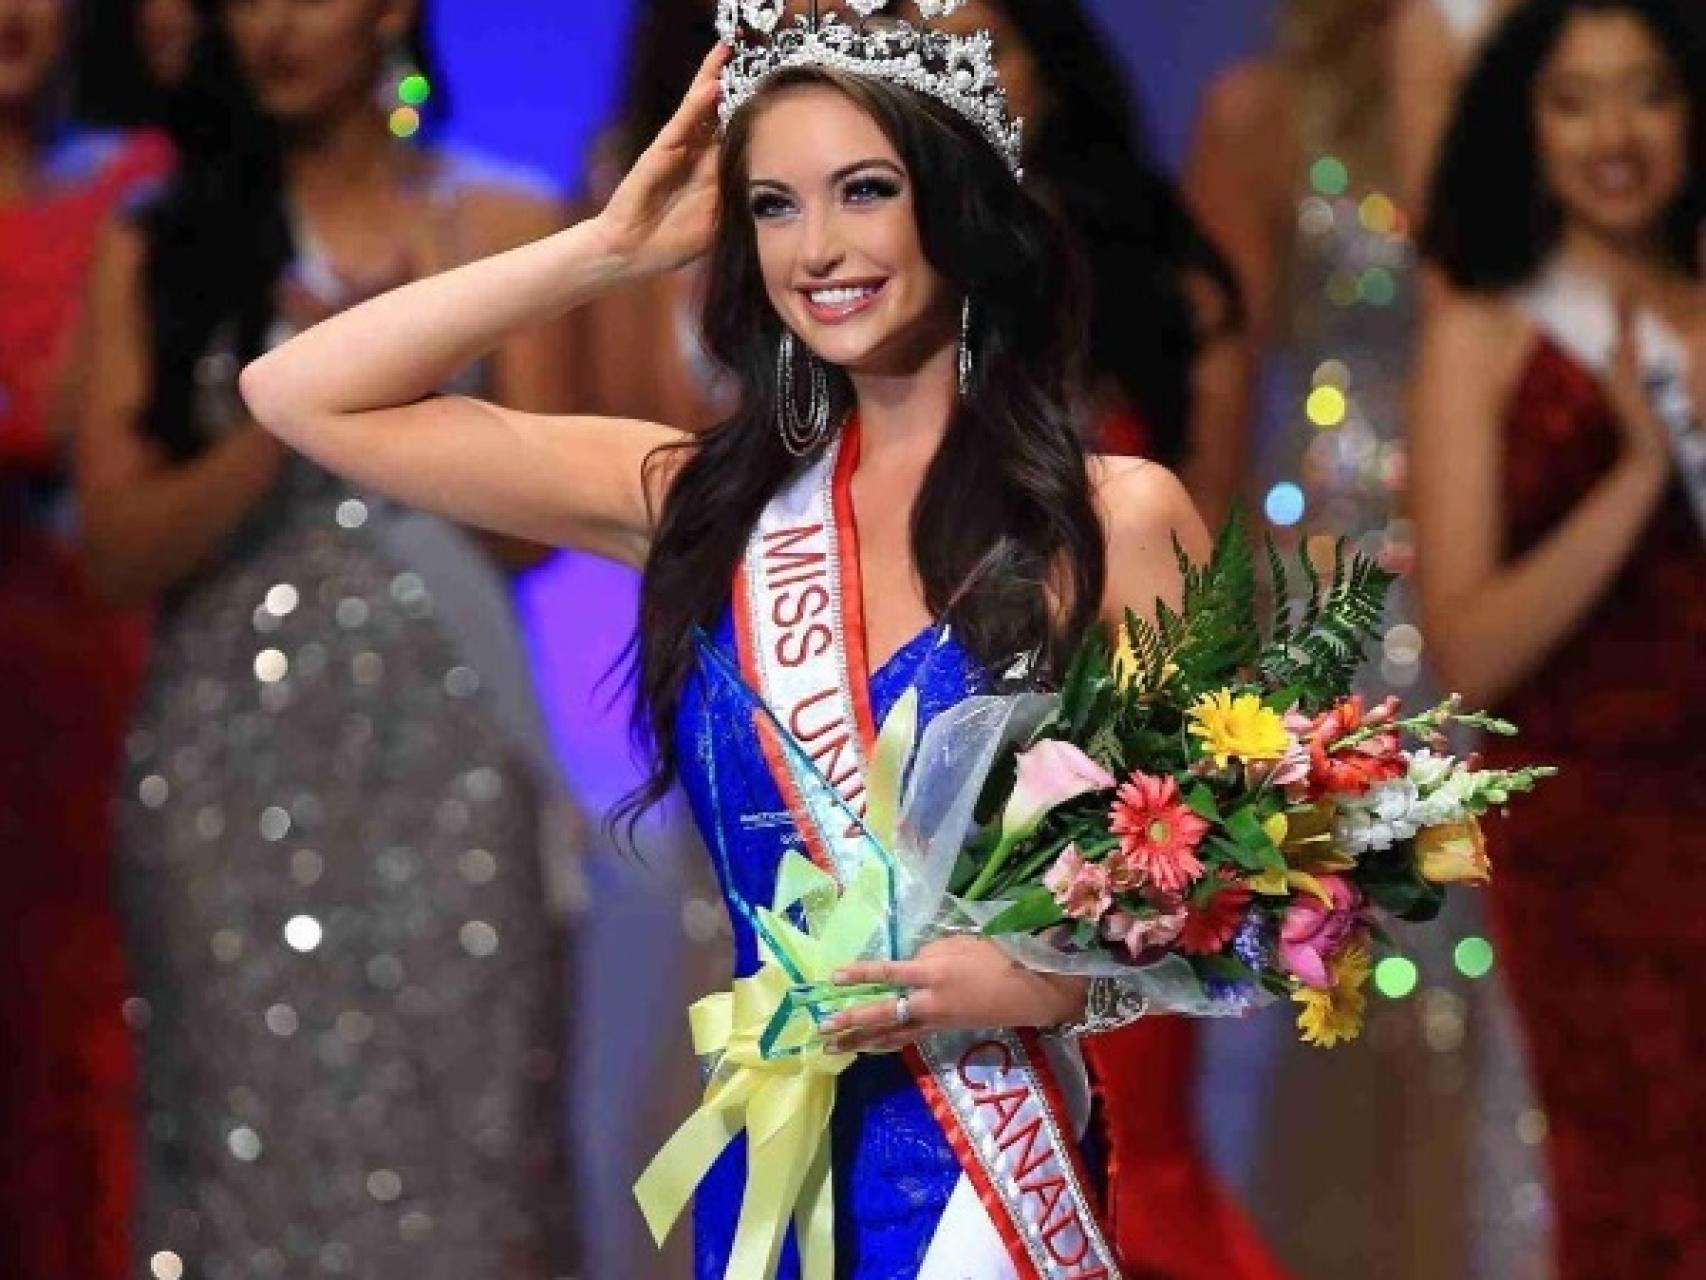 Miss Canadá, la 'curvy' que ha revolucionado el certamen de Miss Universo